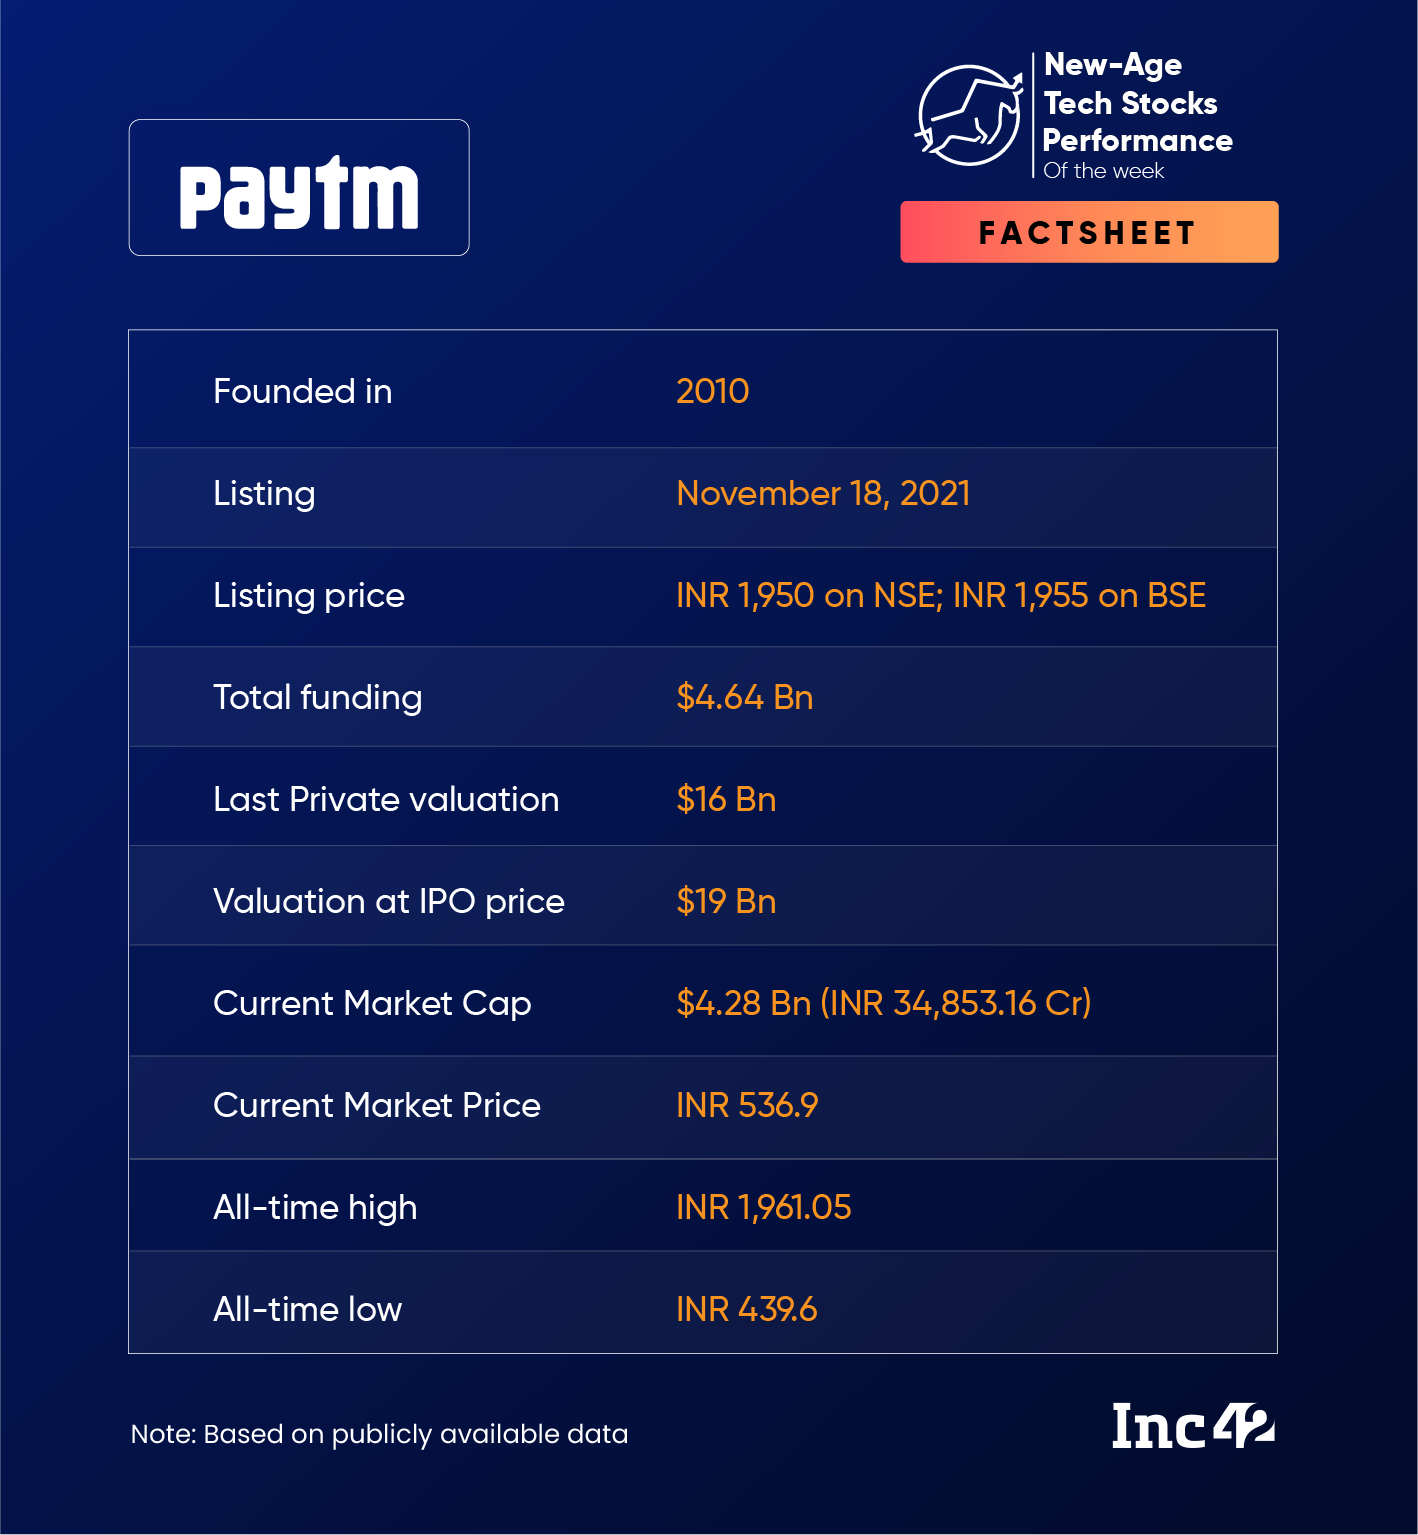 Paytm factsheet